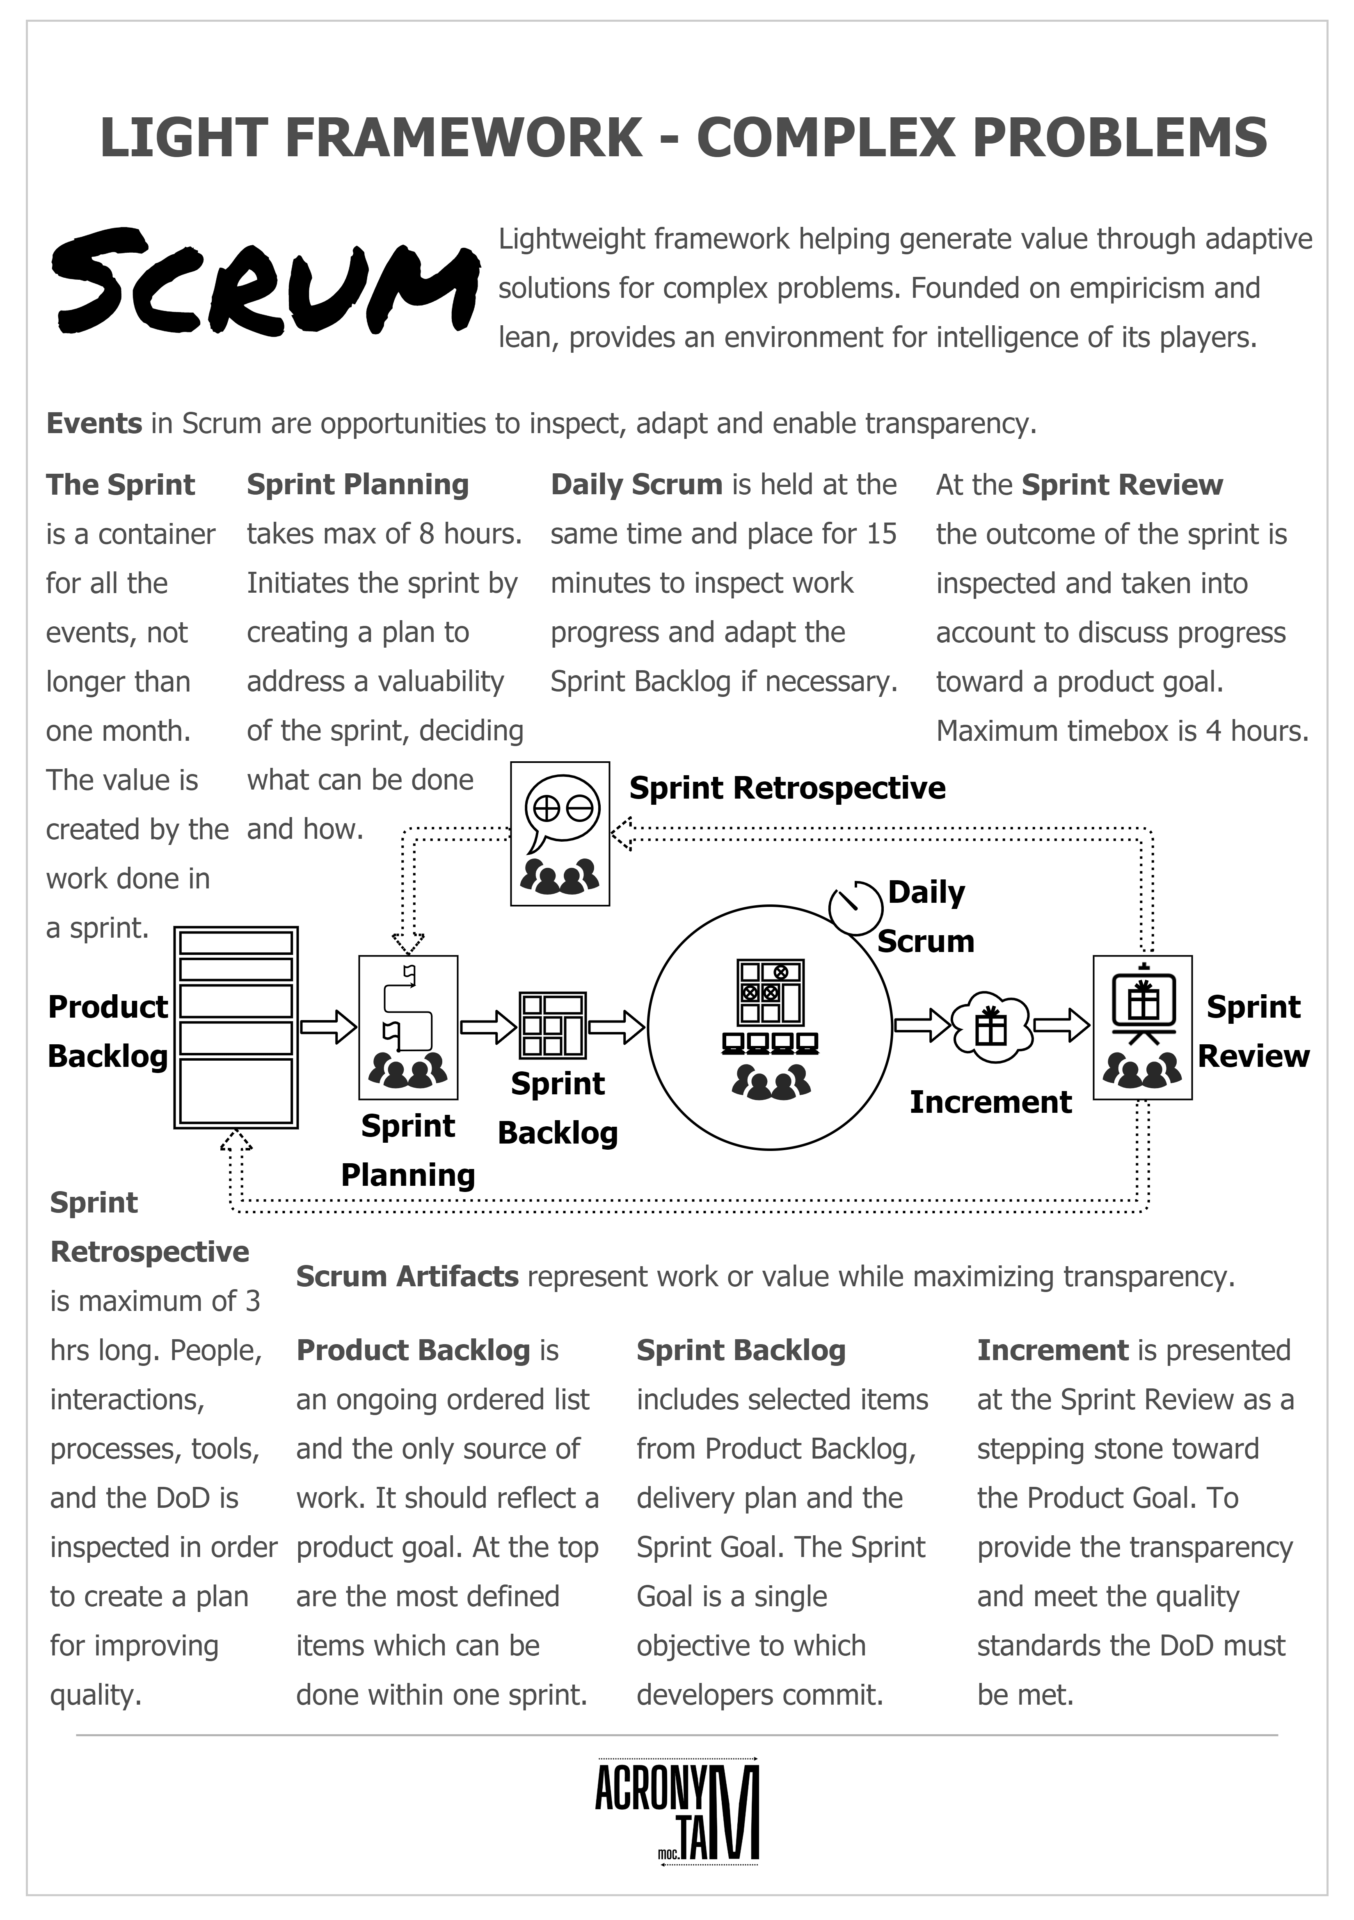 Scrum framework